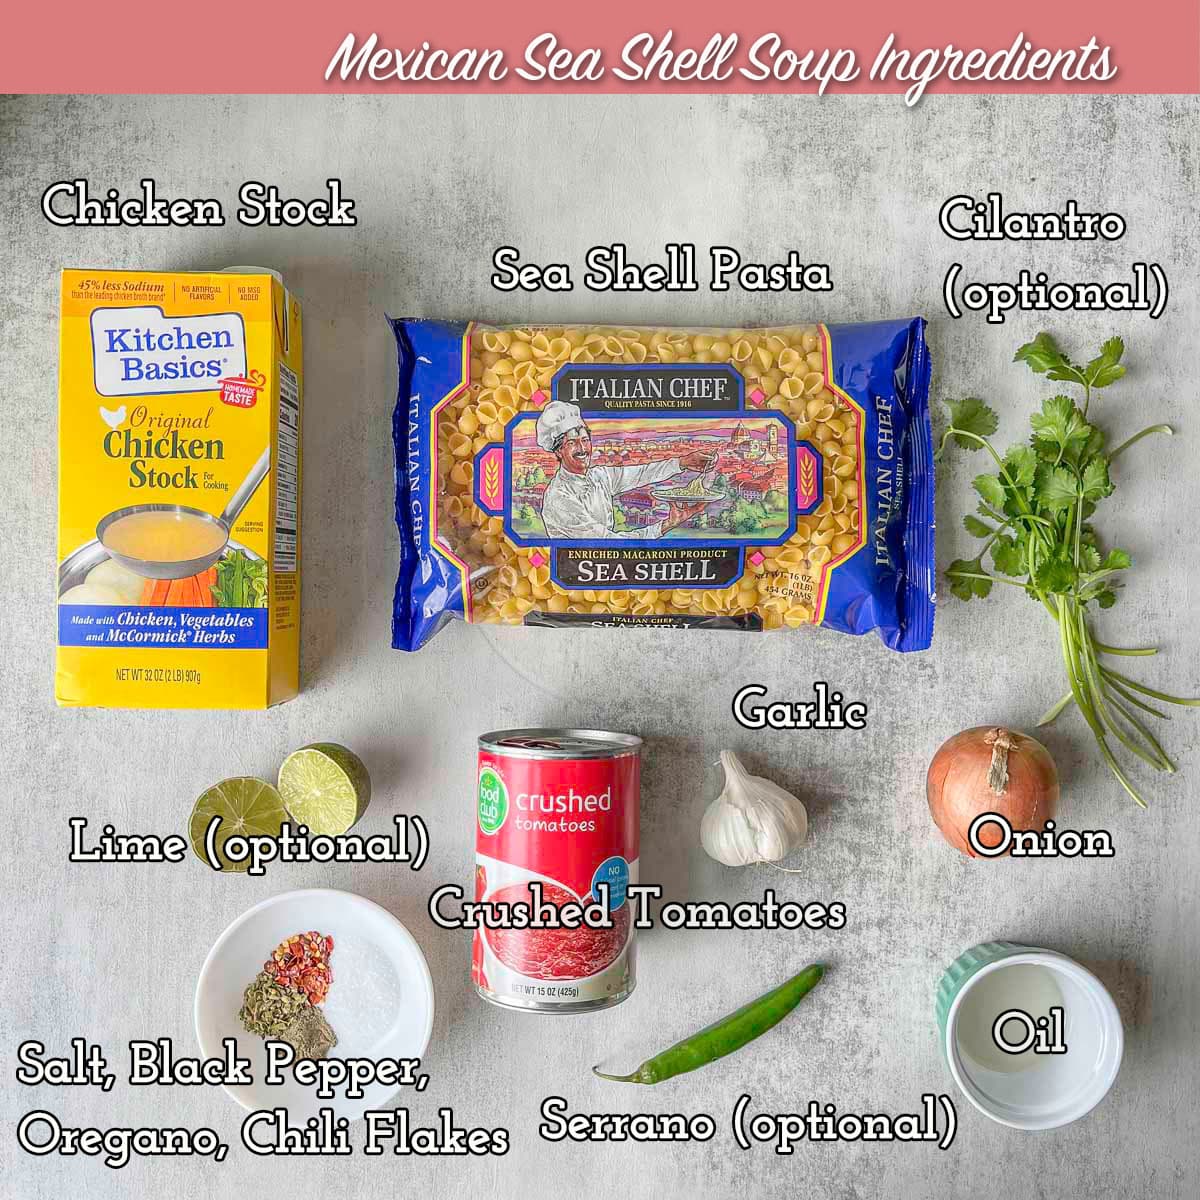 sopita (Mexican soup) ingredients